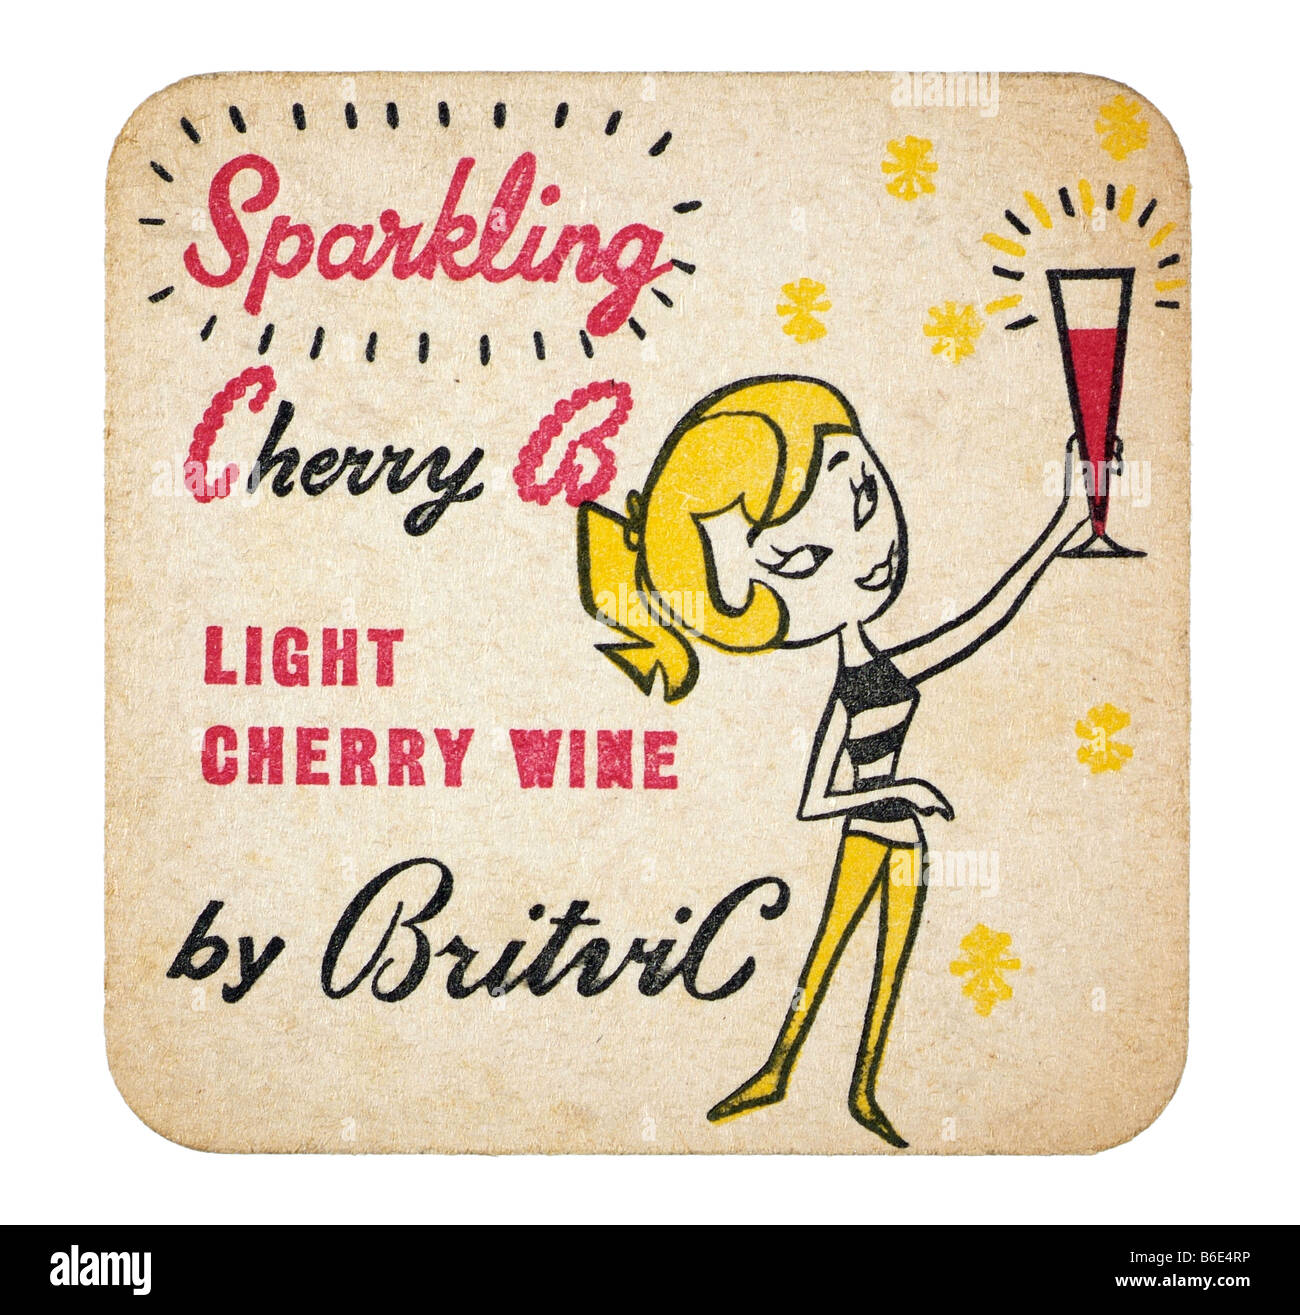 sparkling cherry b light cherry wine by britvic Stock Photo